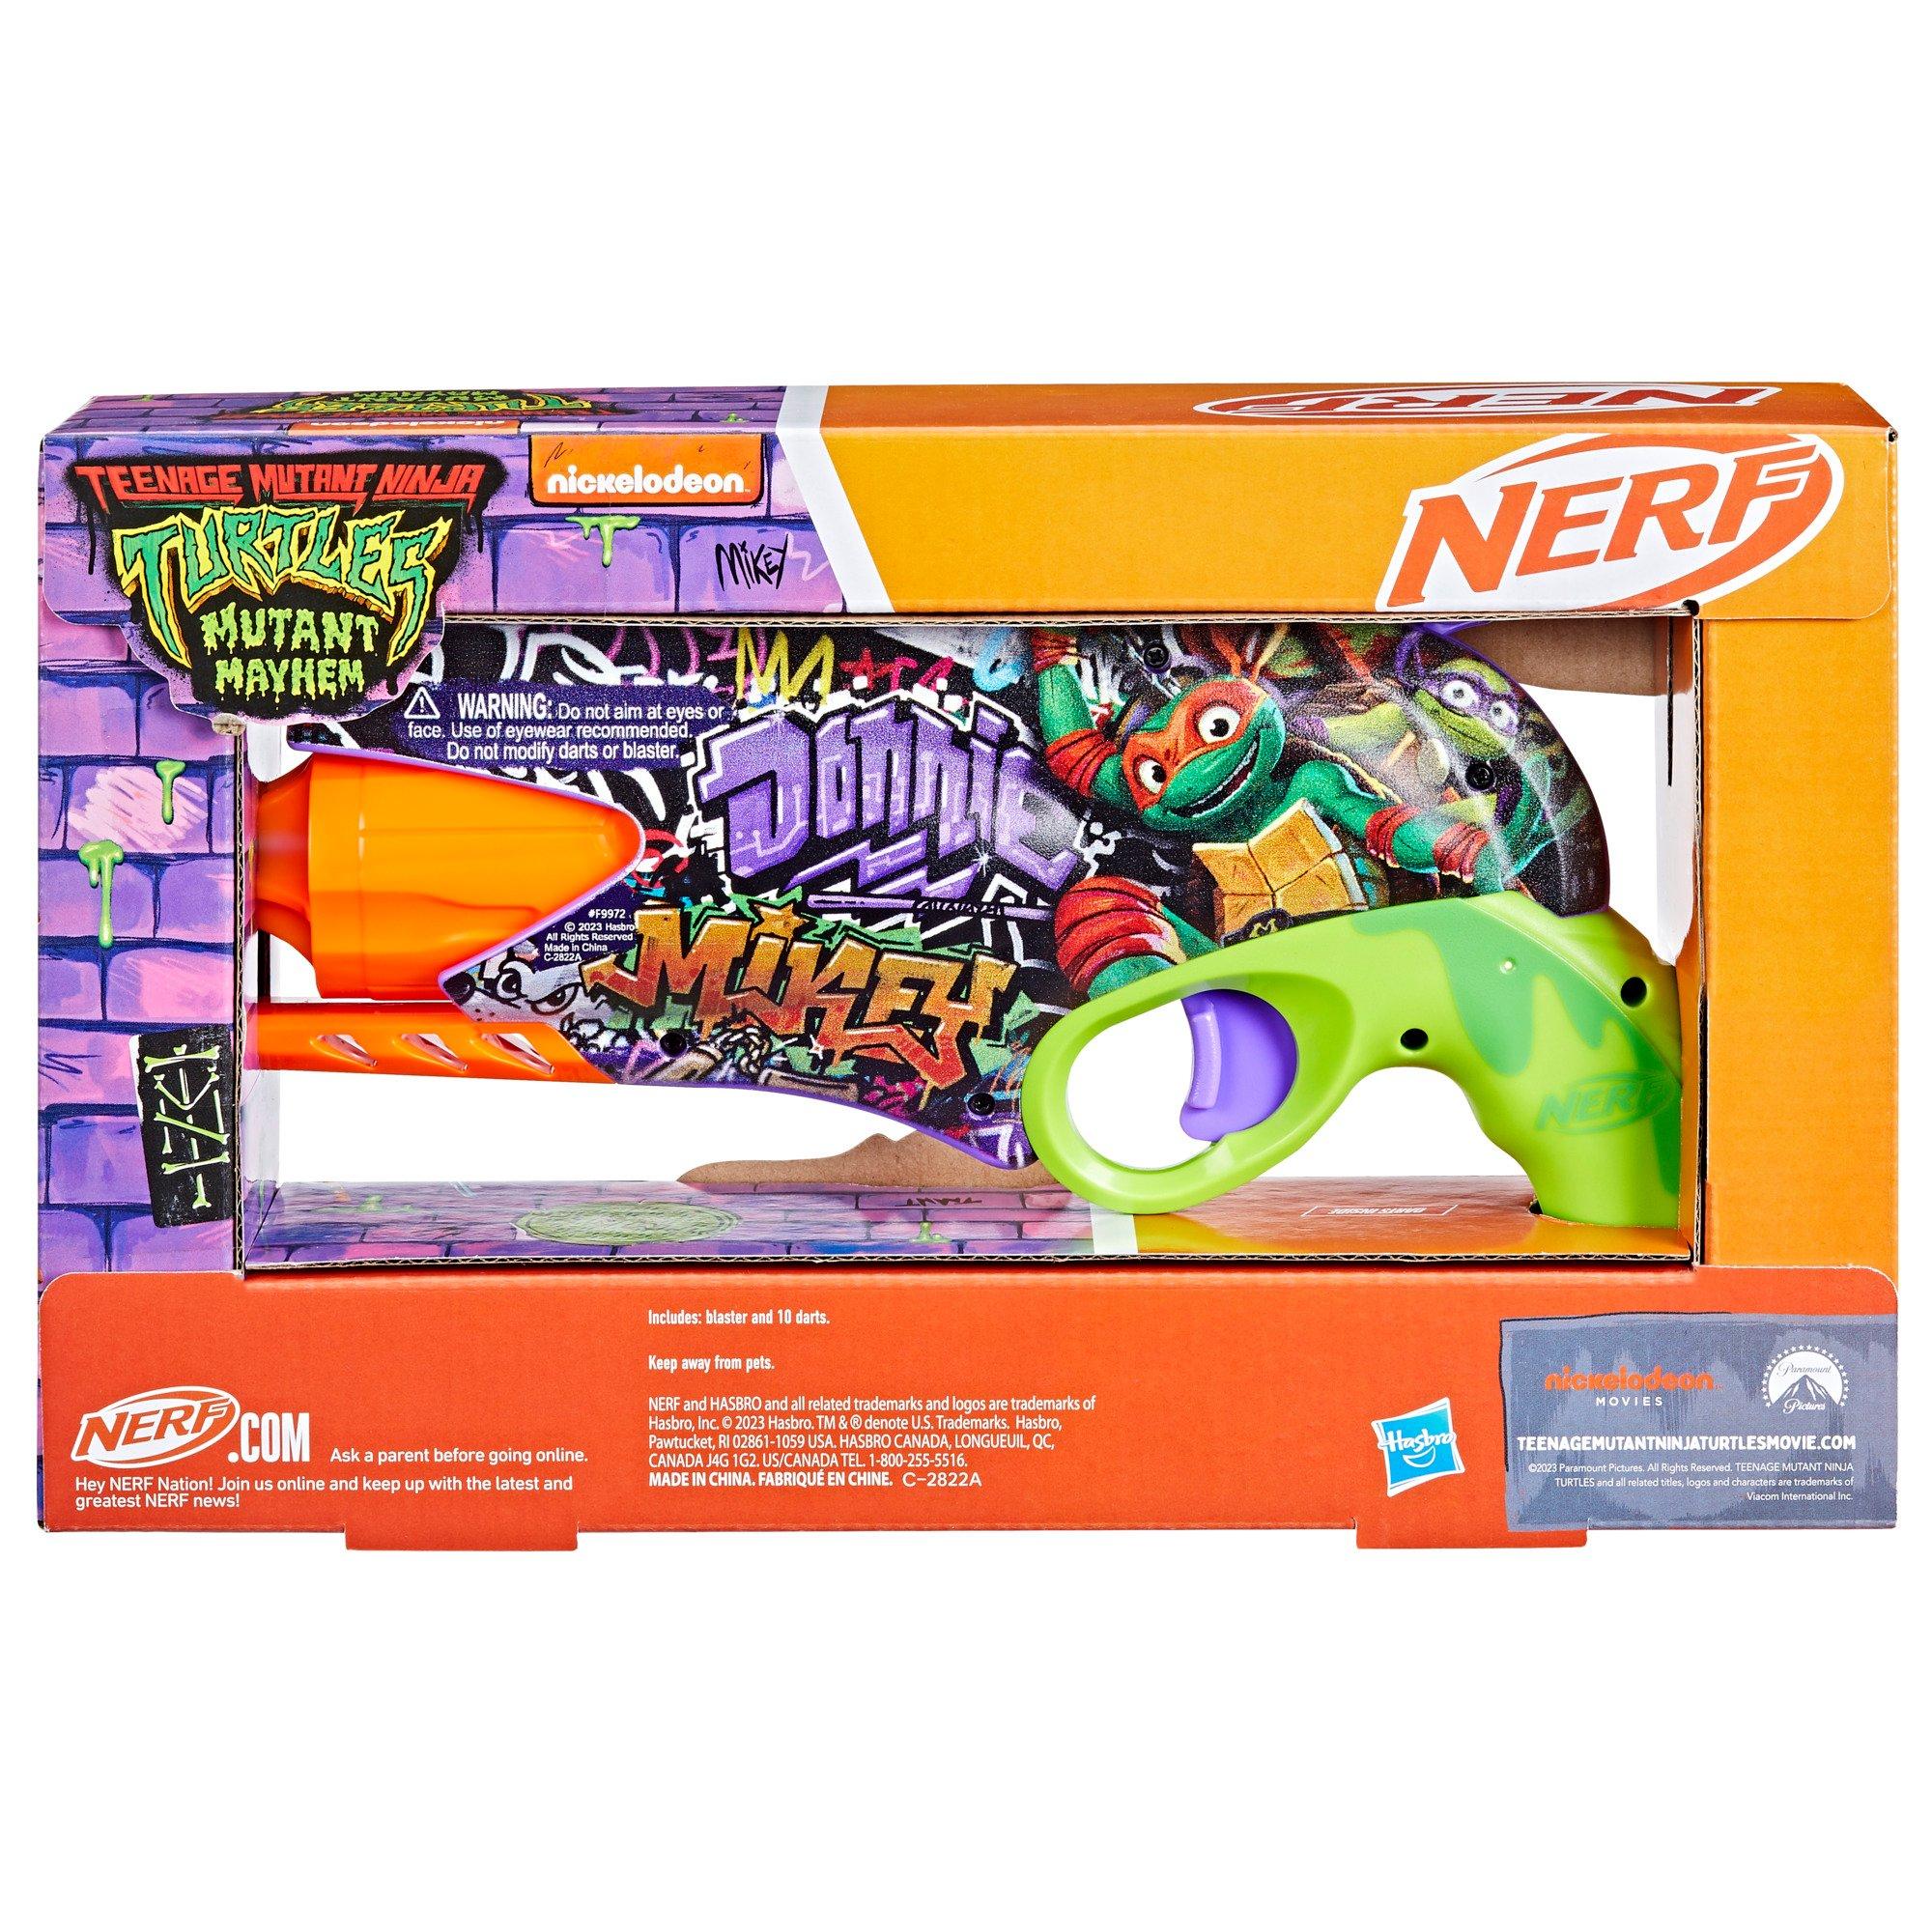 https://media.gamestop.com/i/gamestop/20006127_ALT09/NERF-Teenage-Mutant-Ninja-Turtles-Blaster?$pdp$